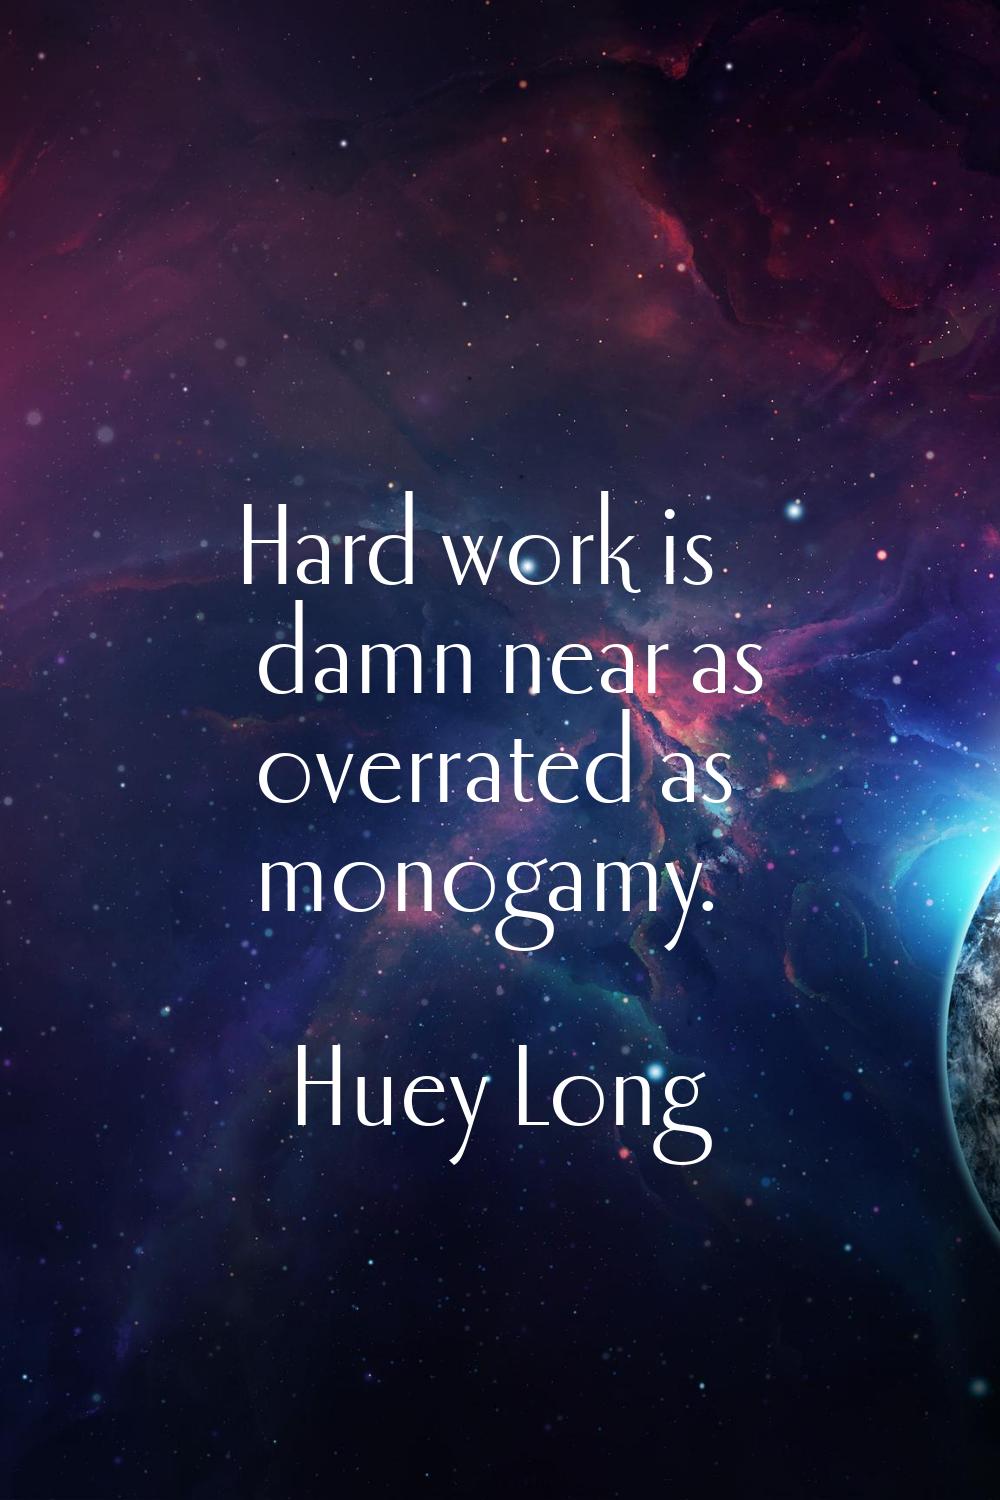 Hard work is damn near as overrated as monogamy.